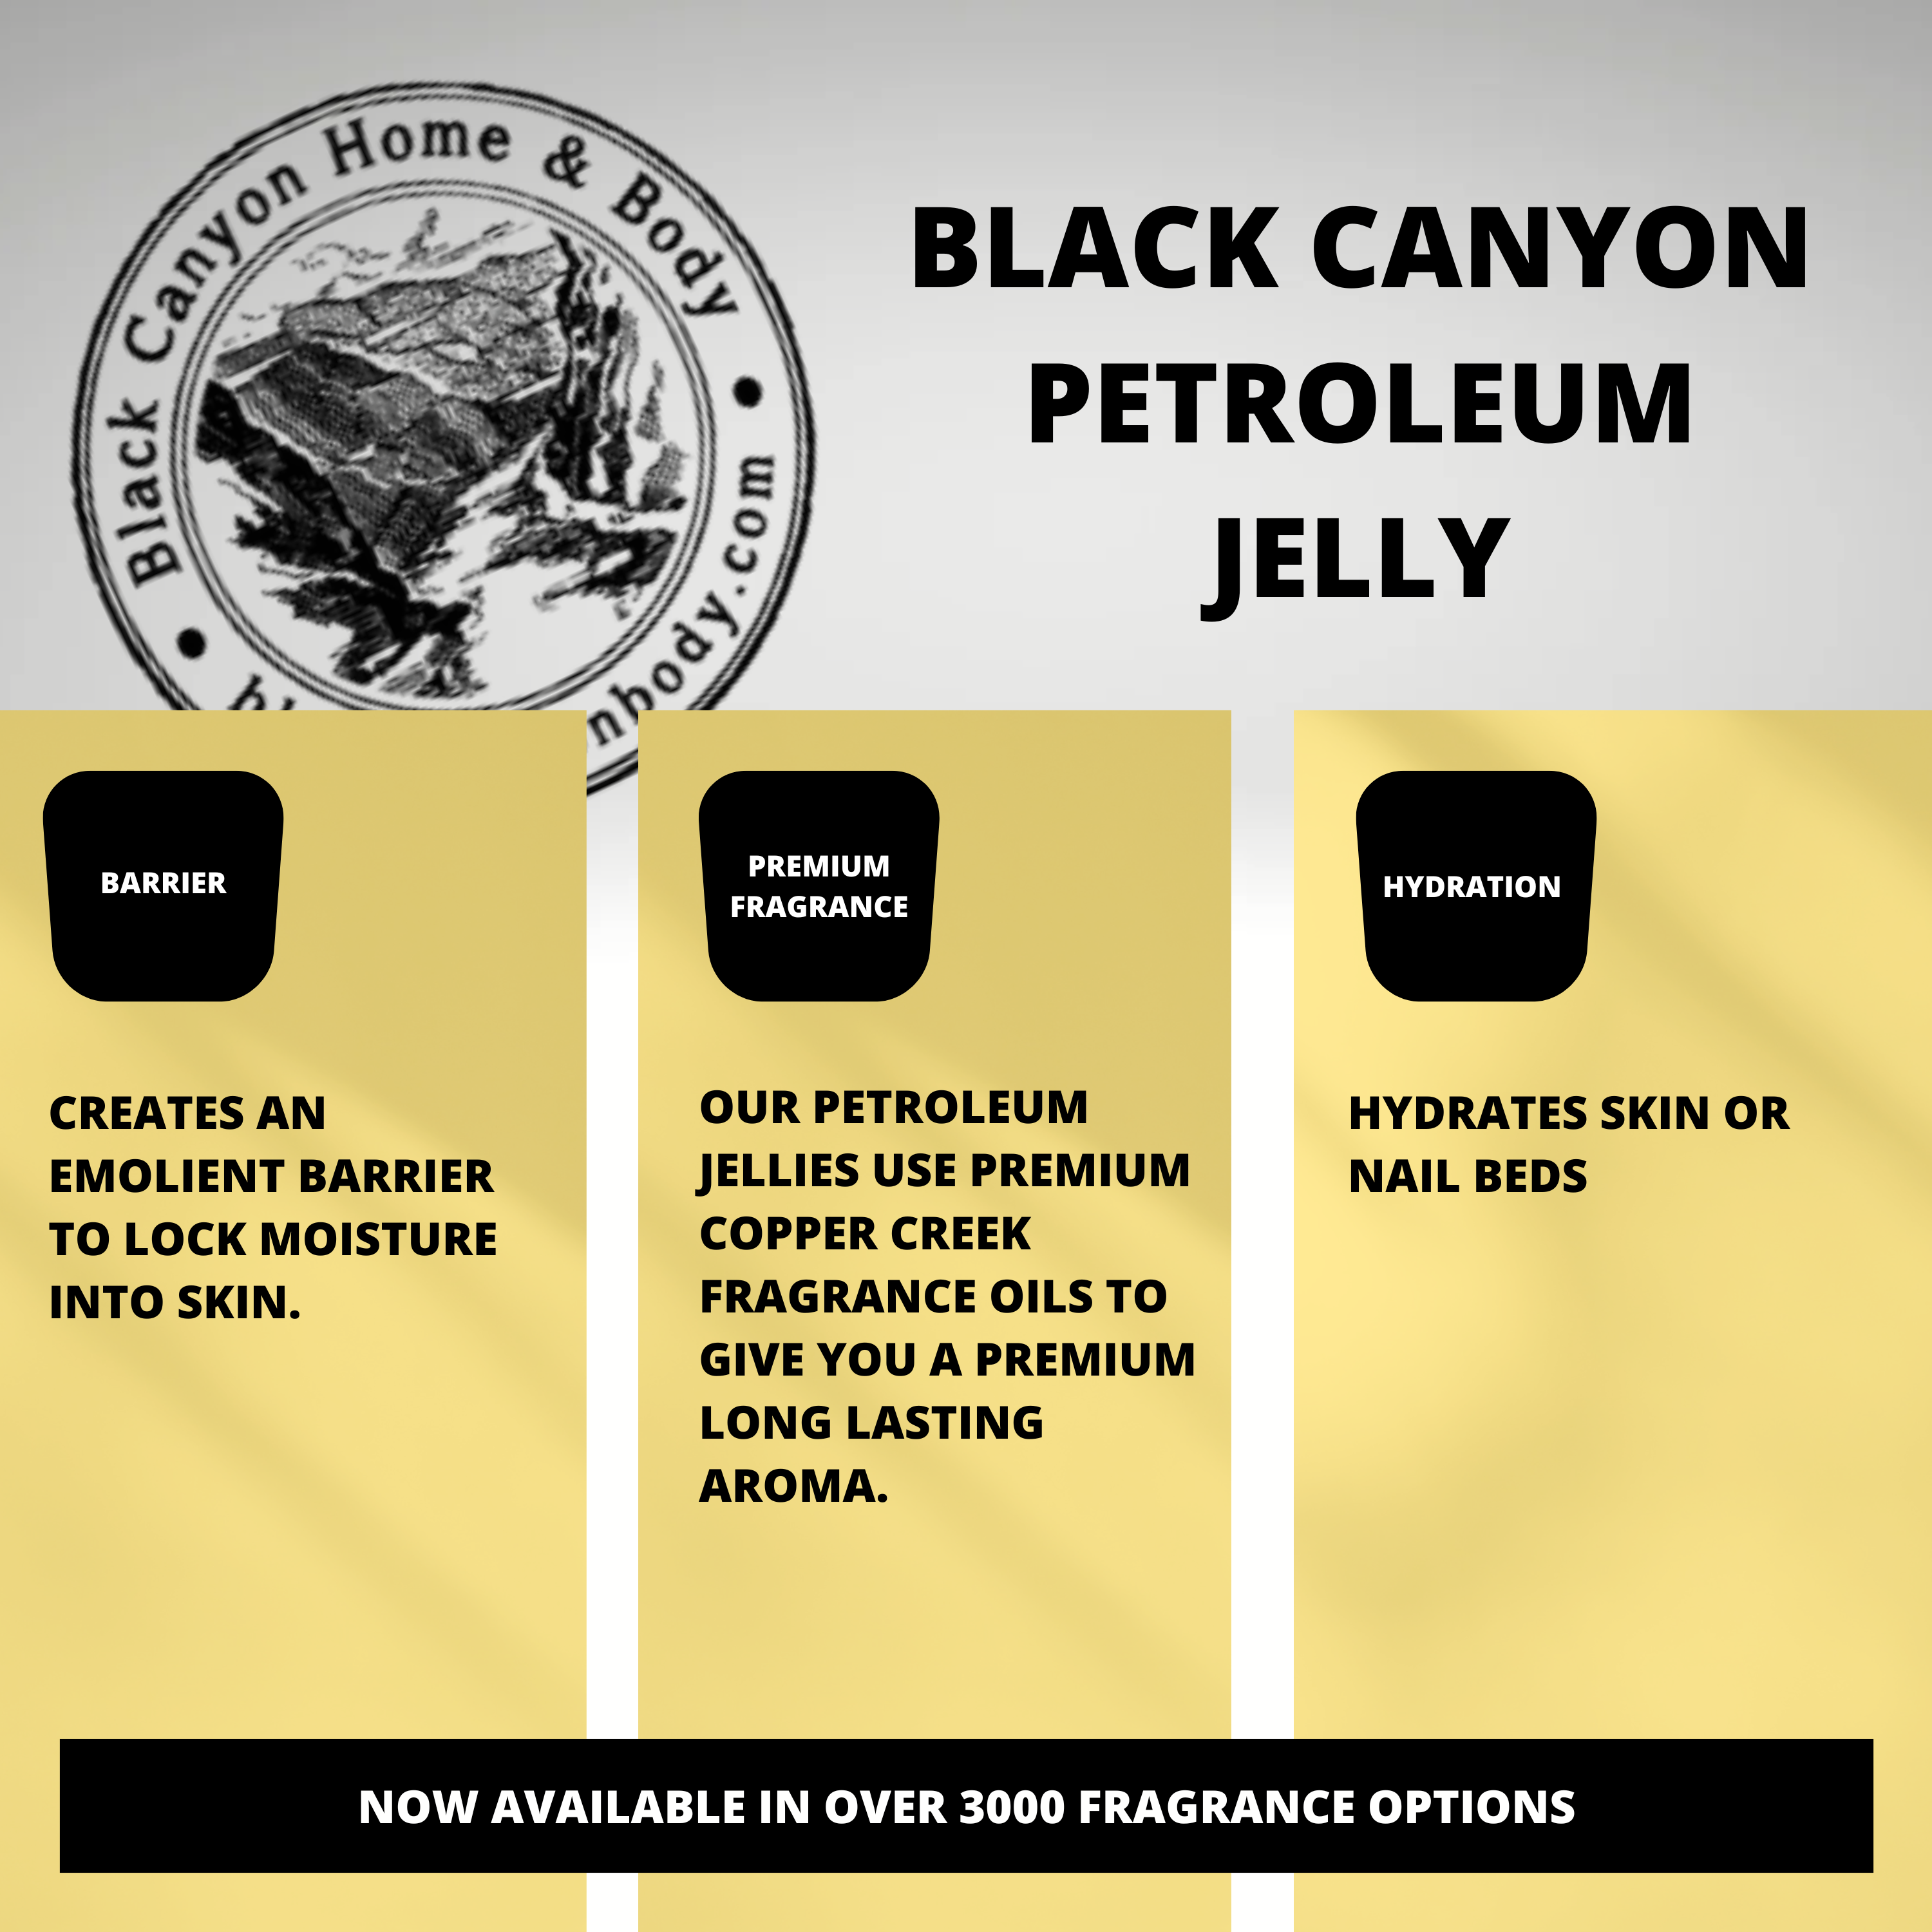 Black Canyon Black Currant & Jasmine Scented Petroleum Jelly